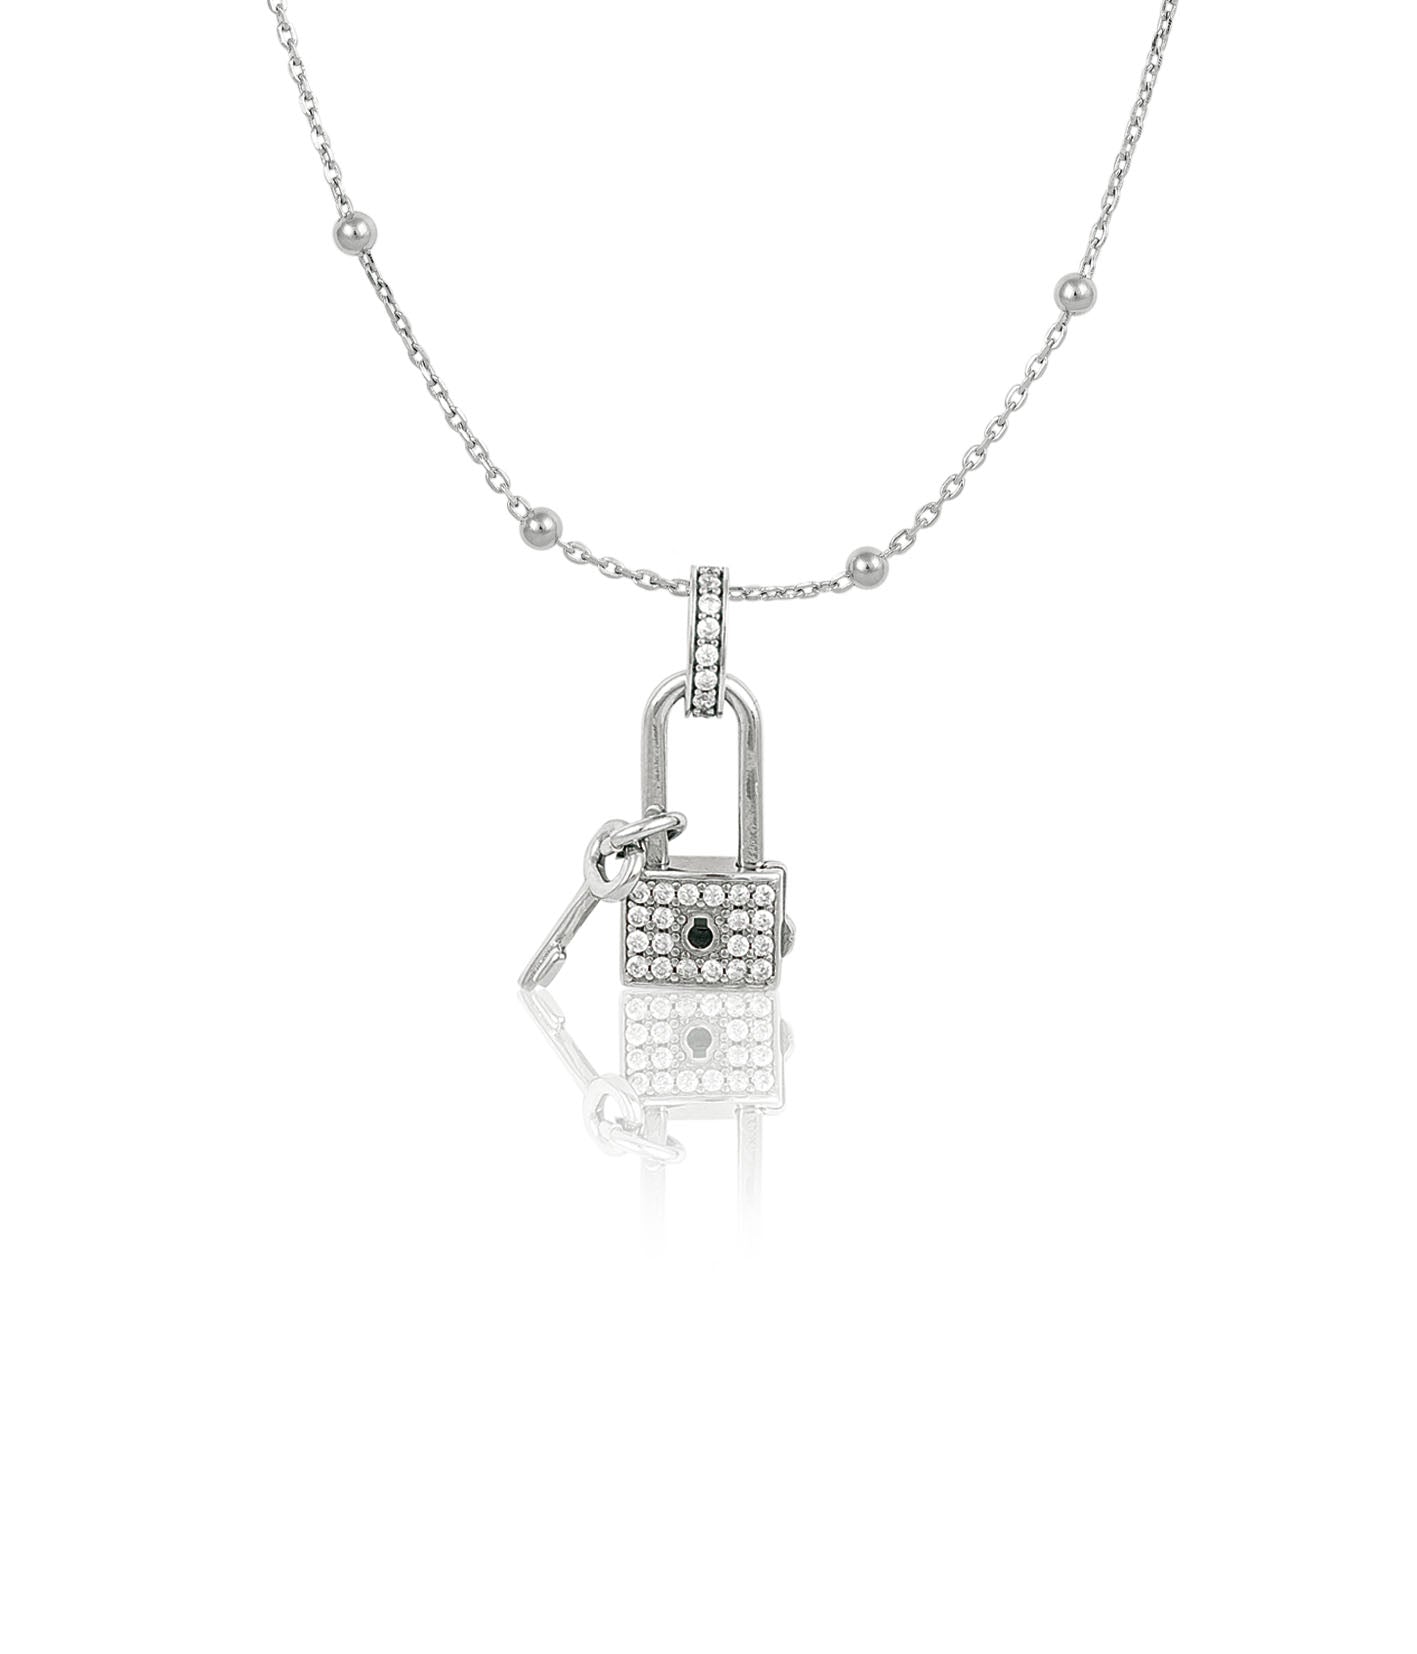 OSA - Keylove 9920 necklace